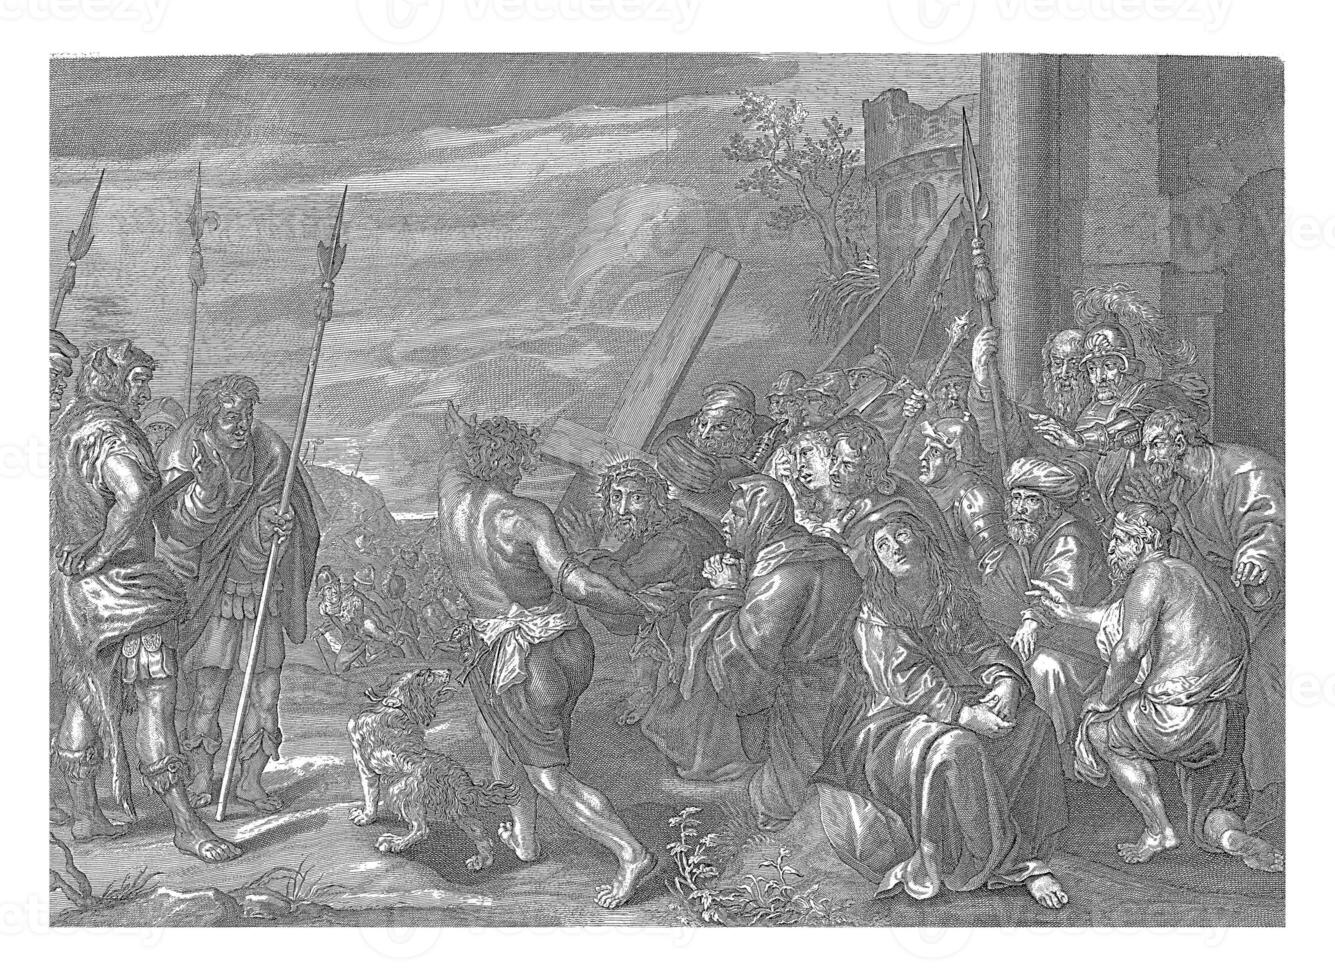 kruisdraging, anoniem, na Alexander voet i, na jan busje hol Hoecke, na Jakob jordaens i, na schelde Adamsz. bolswert, na anthony busje dijk, 1630 - 1702 foto